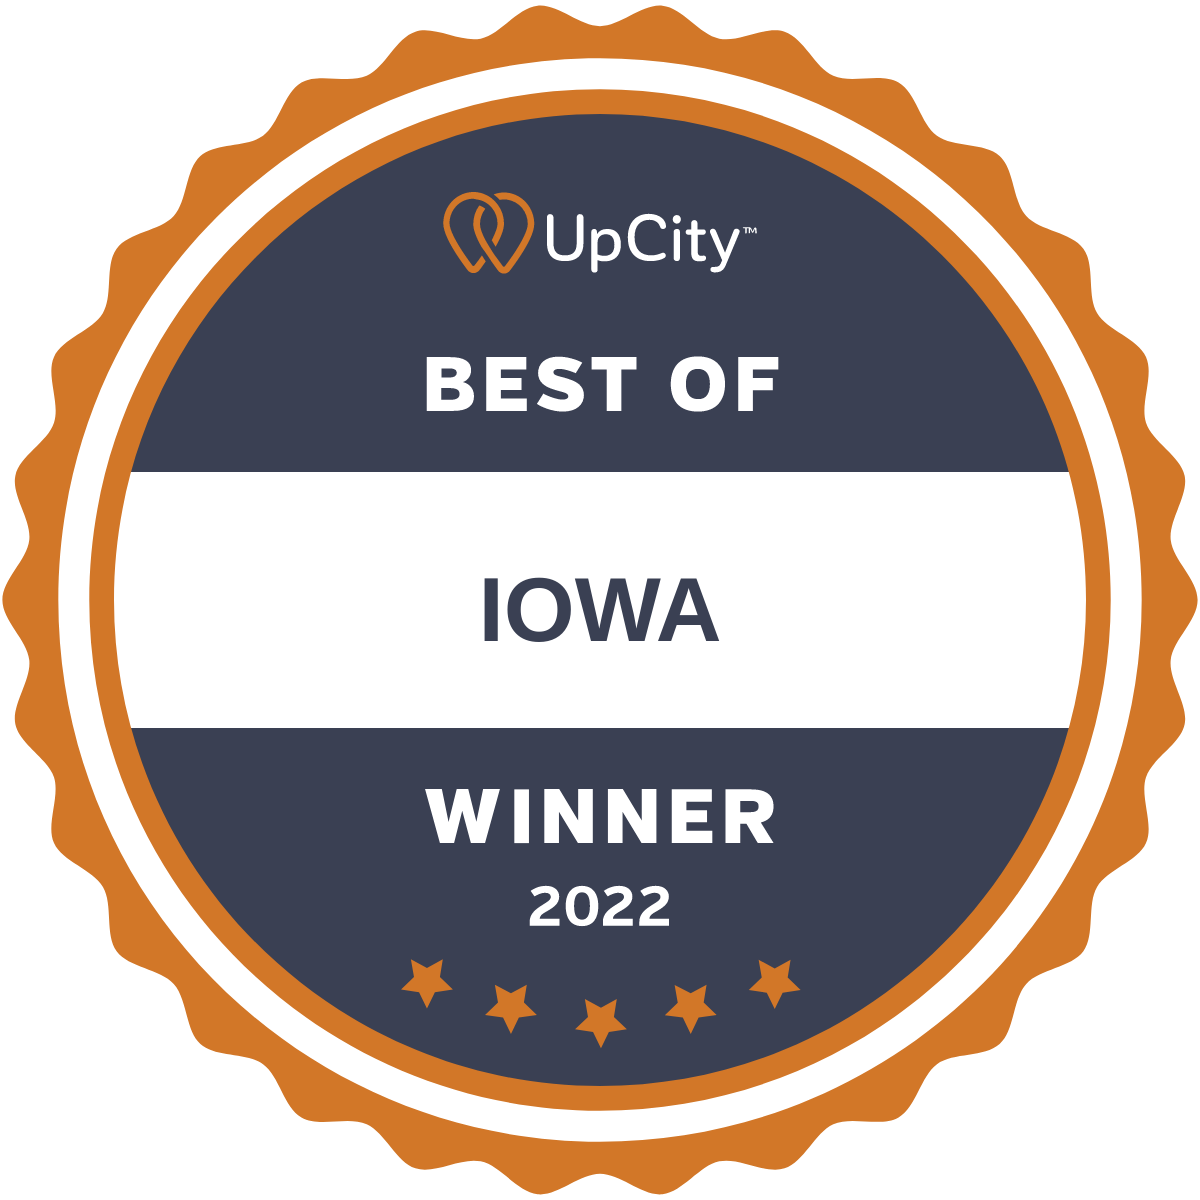 early bird digital marketing awarded the Upcity Best Digital Marketing Agency Iowa Award 2022